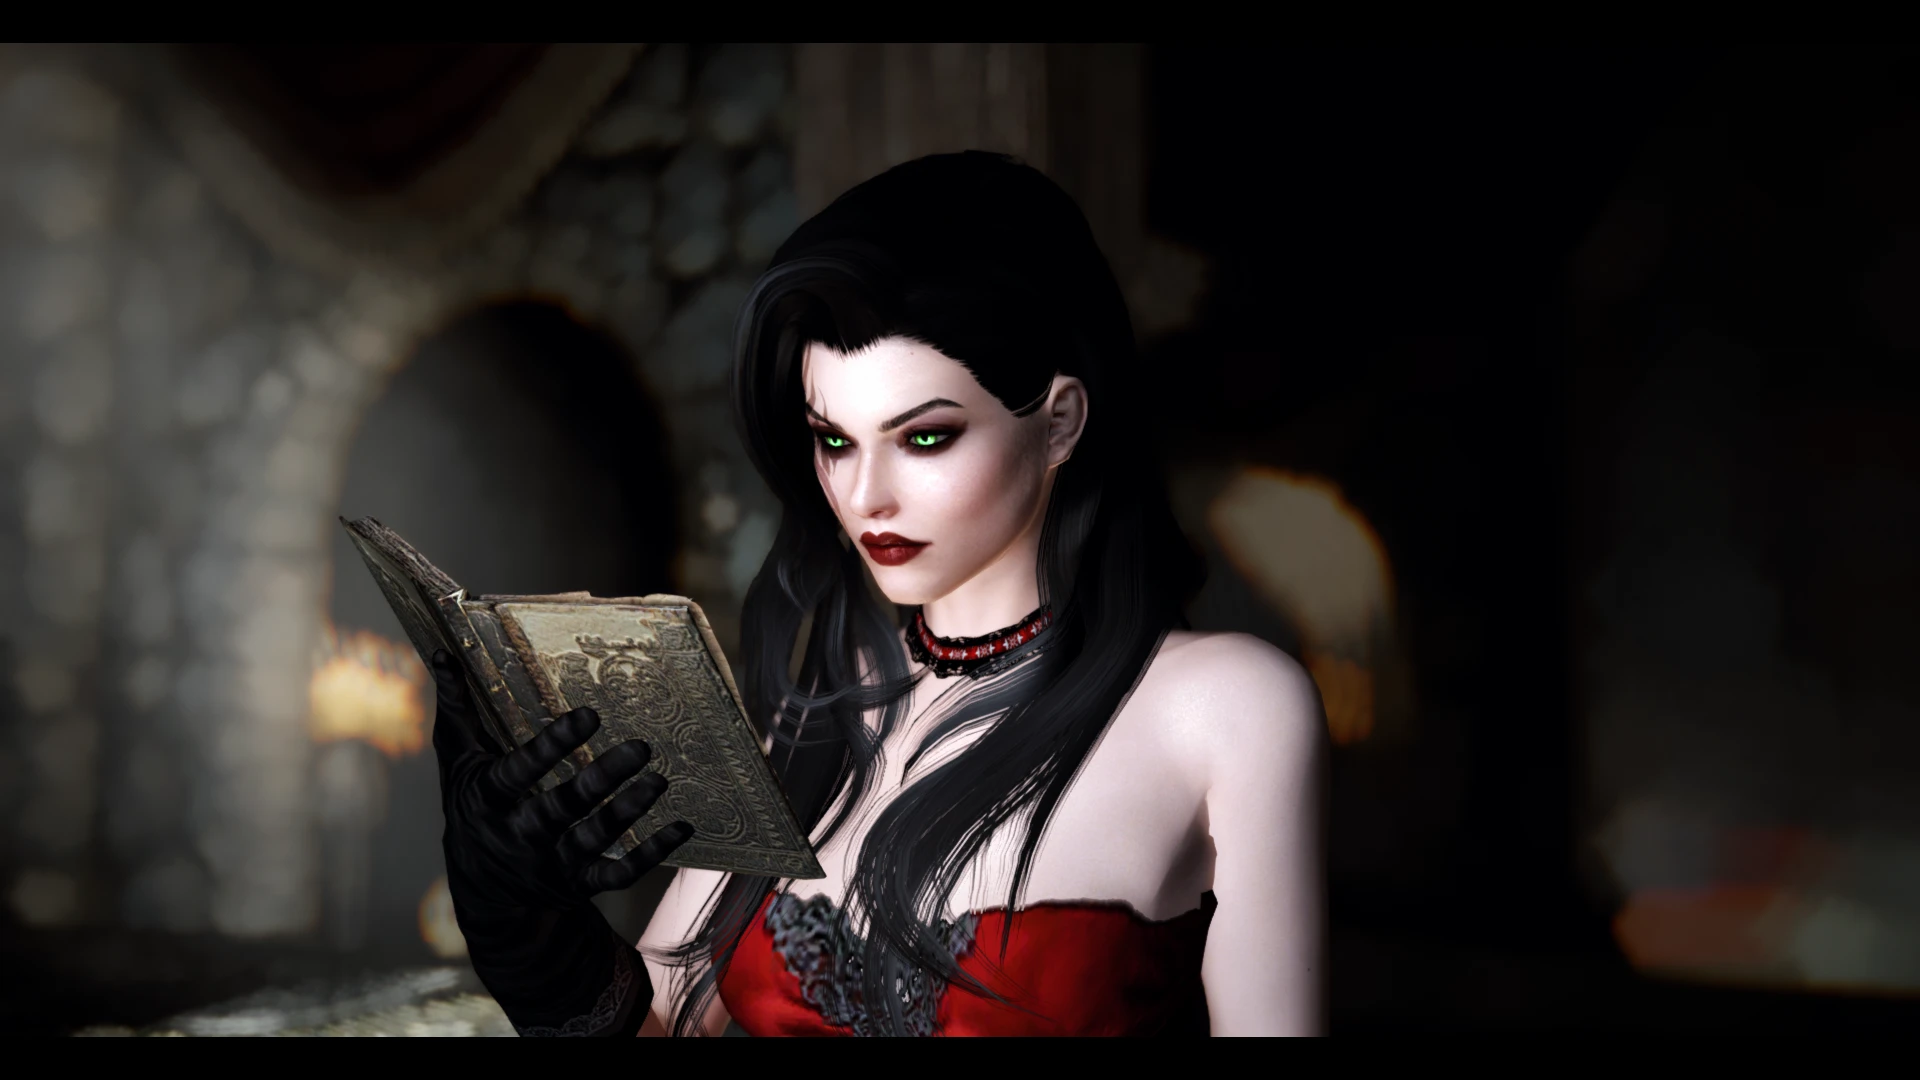 Voira - vampire mage follower at Skyrim Special Edition Nexus - Mods. sourc...